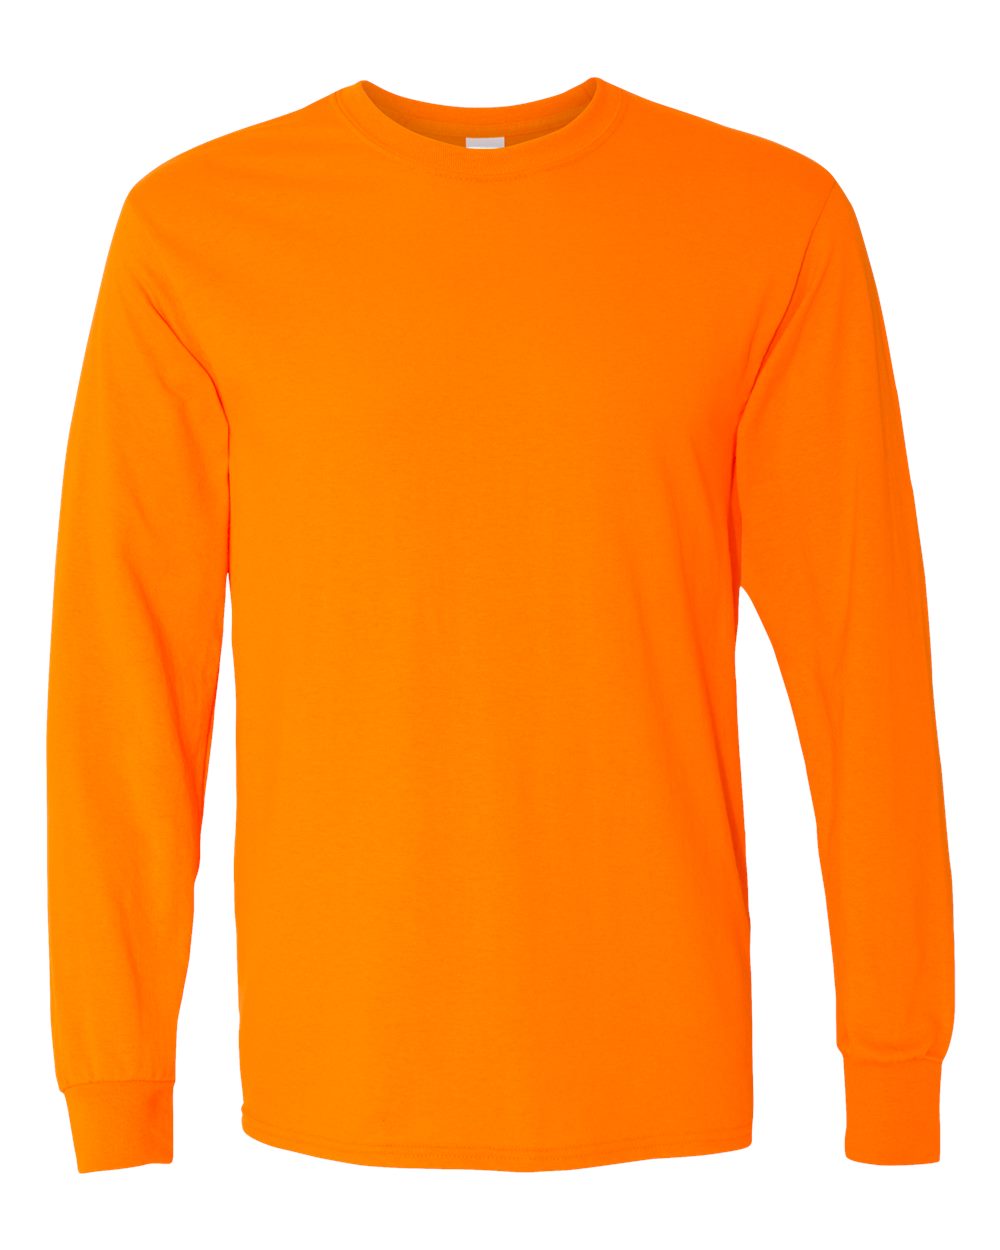 Pretreated Gildan 5400 Heavy Cotton Long Sleeve T-Shirt - Safety Orange